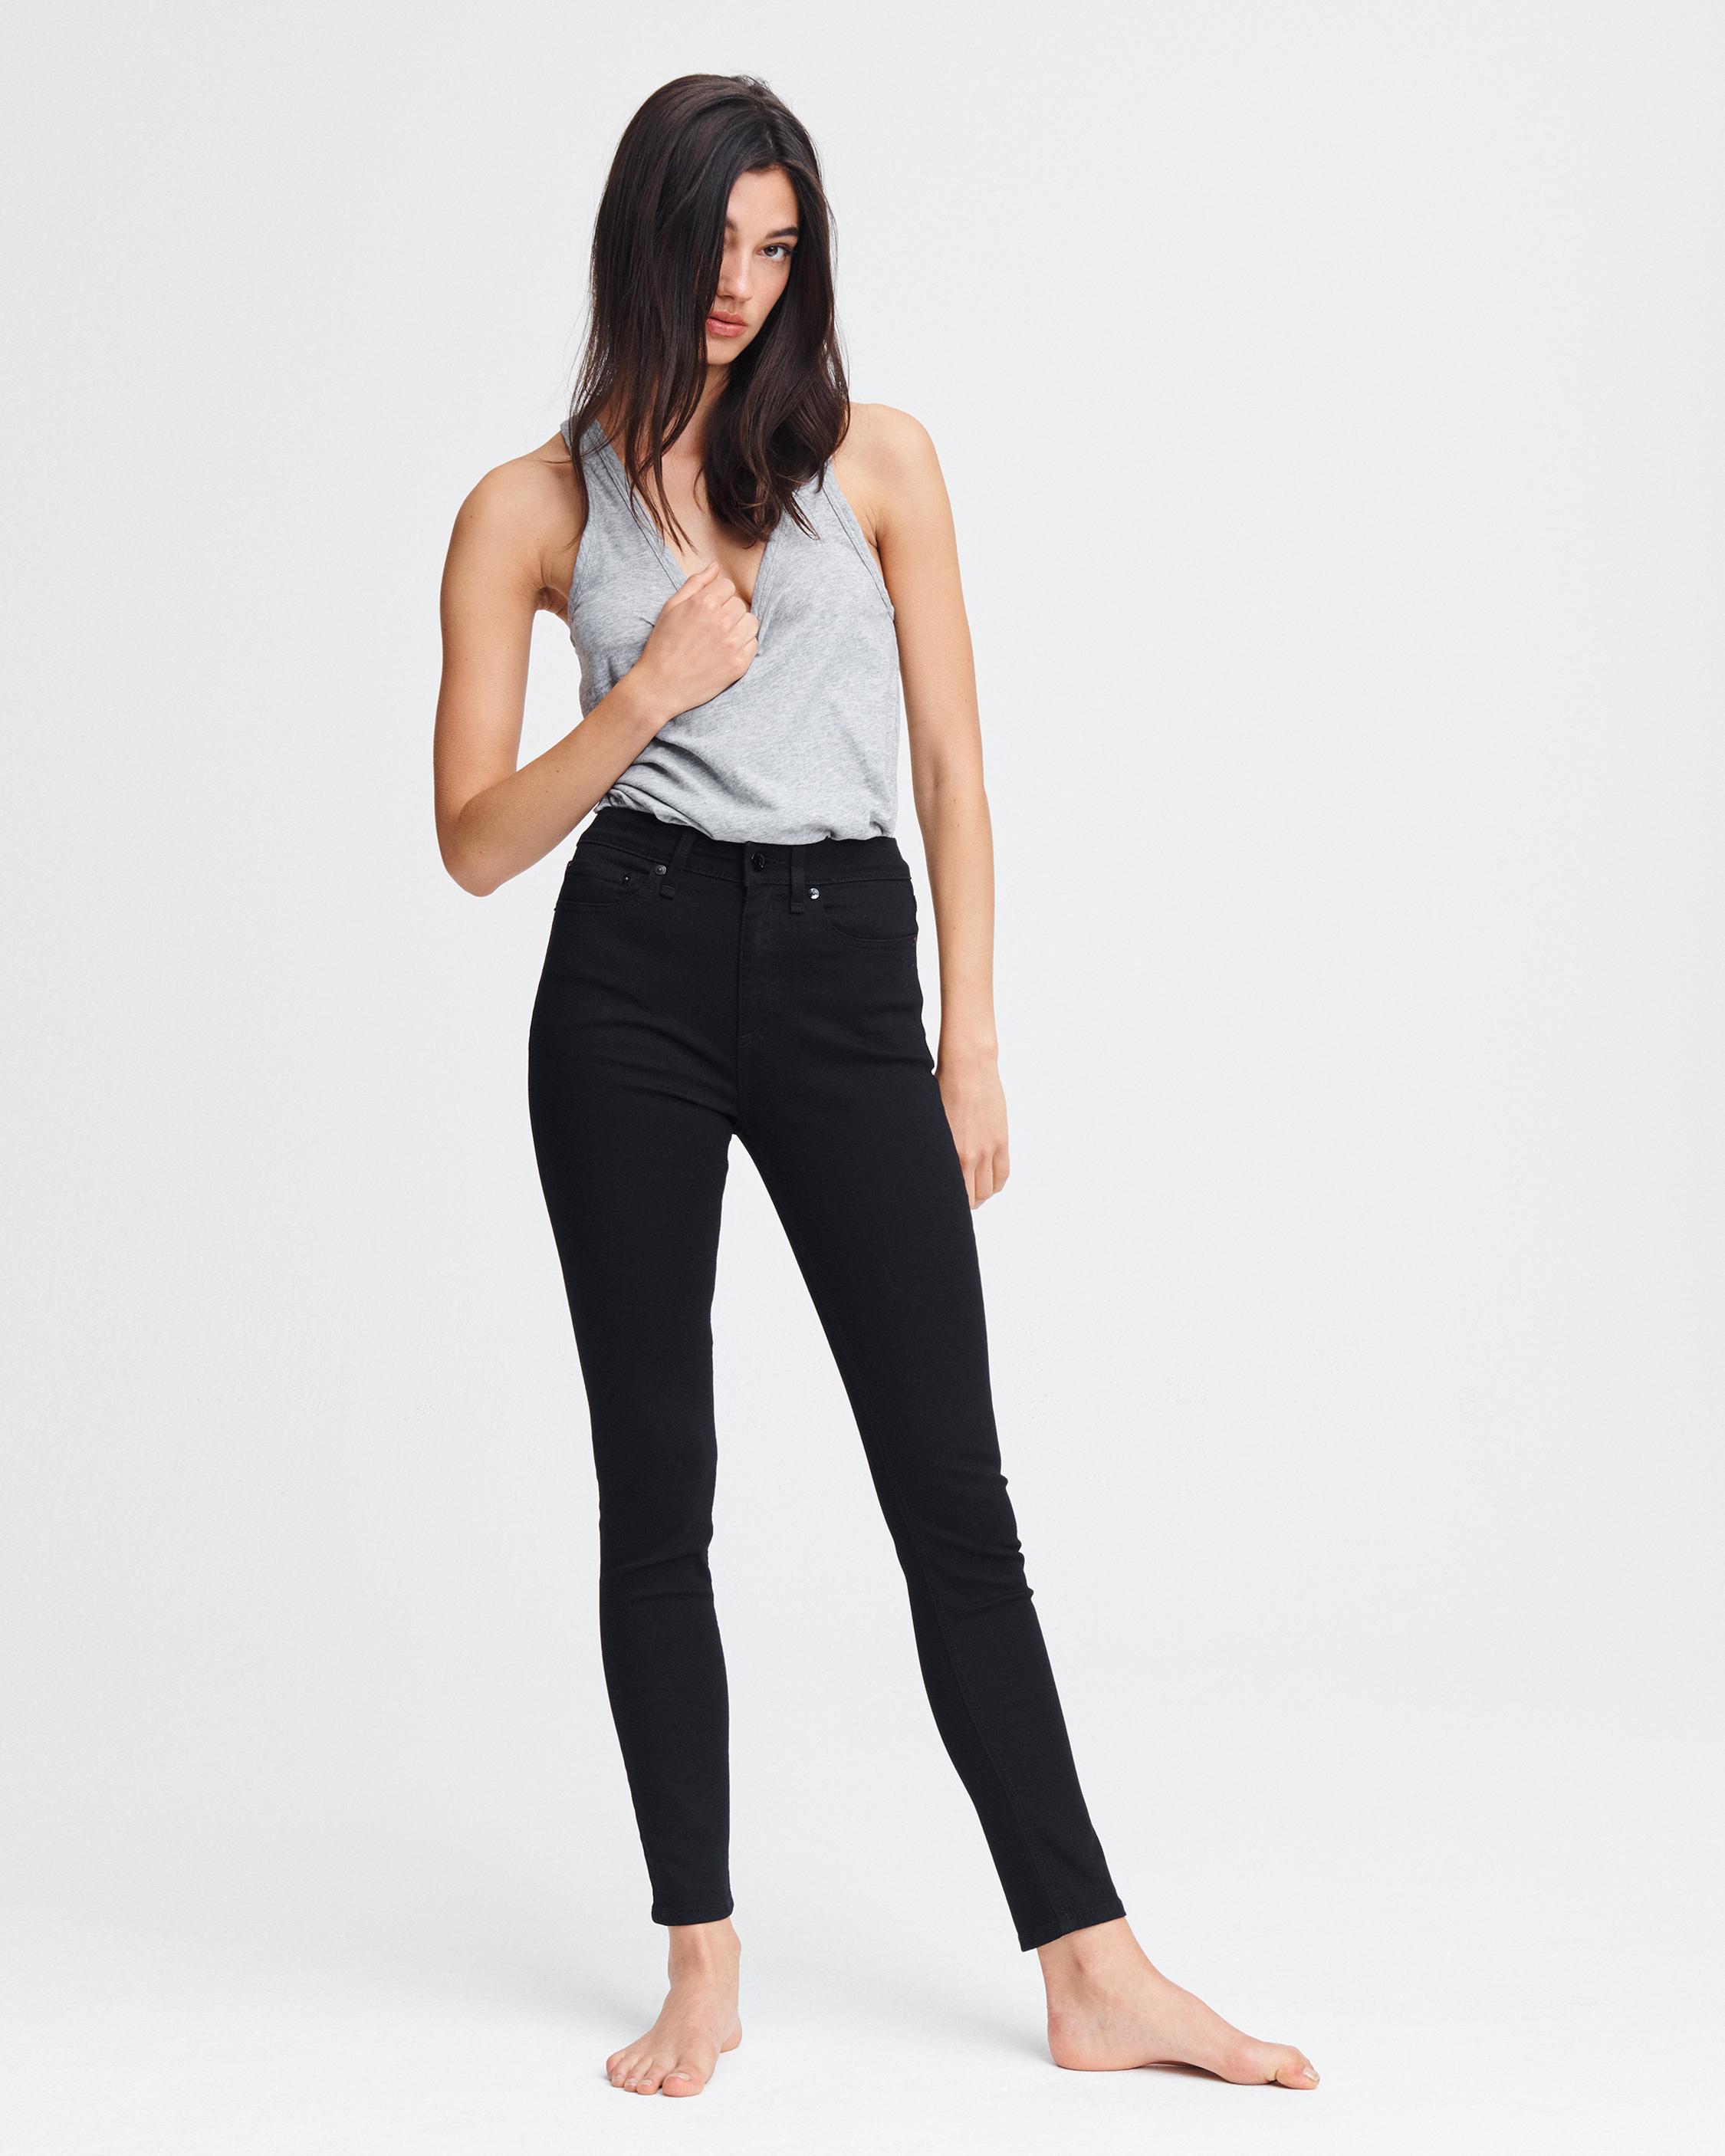 Chanel 2021 Skinny Leg Jeans - Black, 10.25 Rise Jeans, Clothing